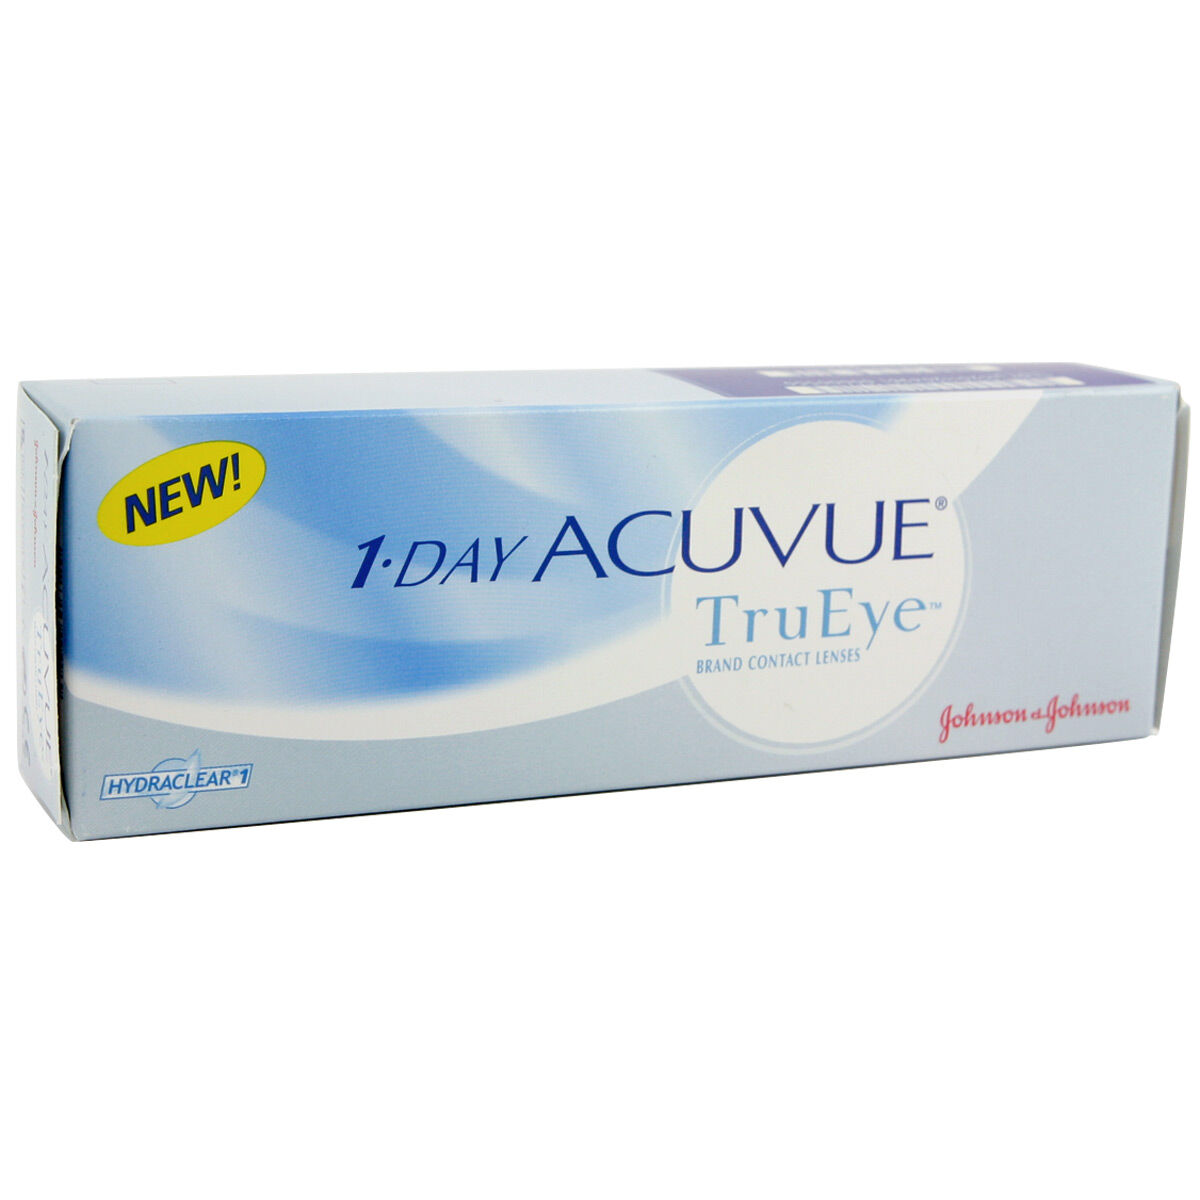 Acuvue 1 Day Acuvue Trueye (30 Contact Lenses), Johnson & Johnson Daily Lenses, Narafilcon A